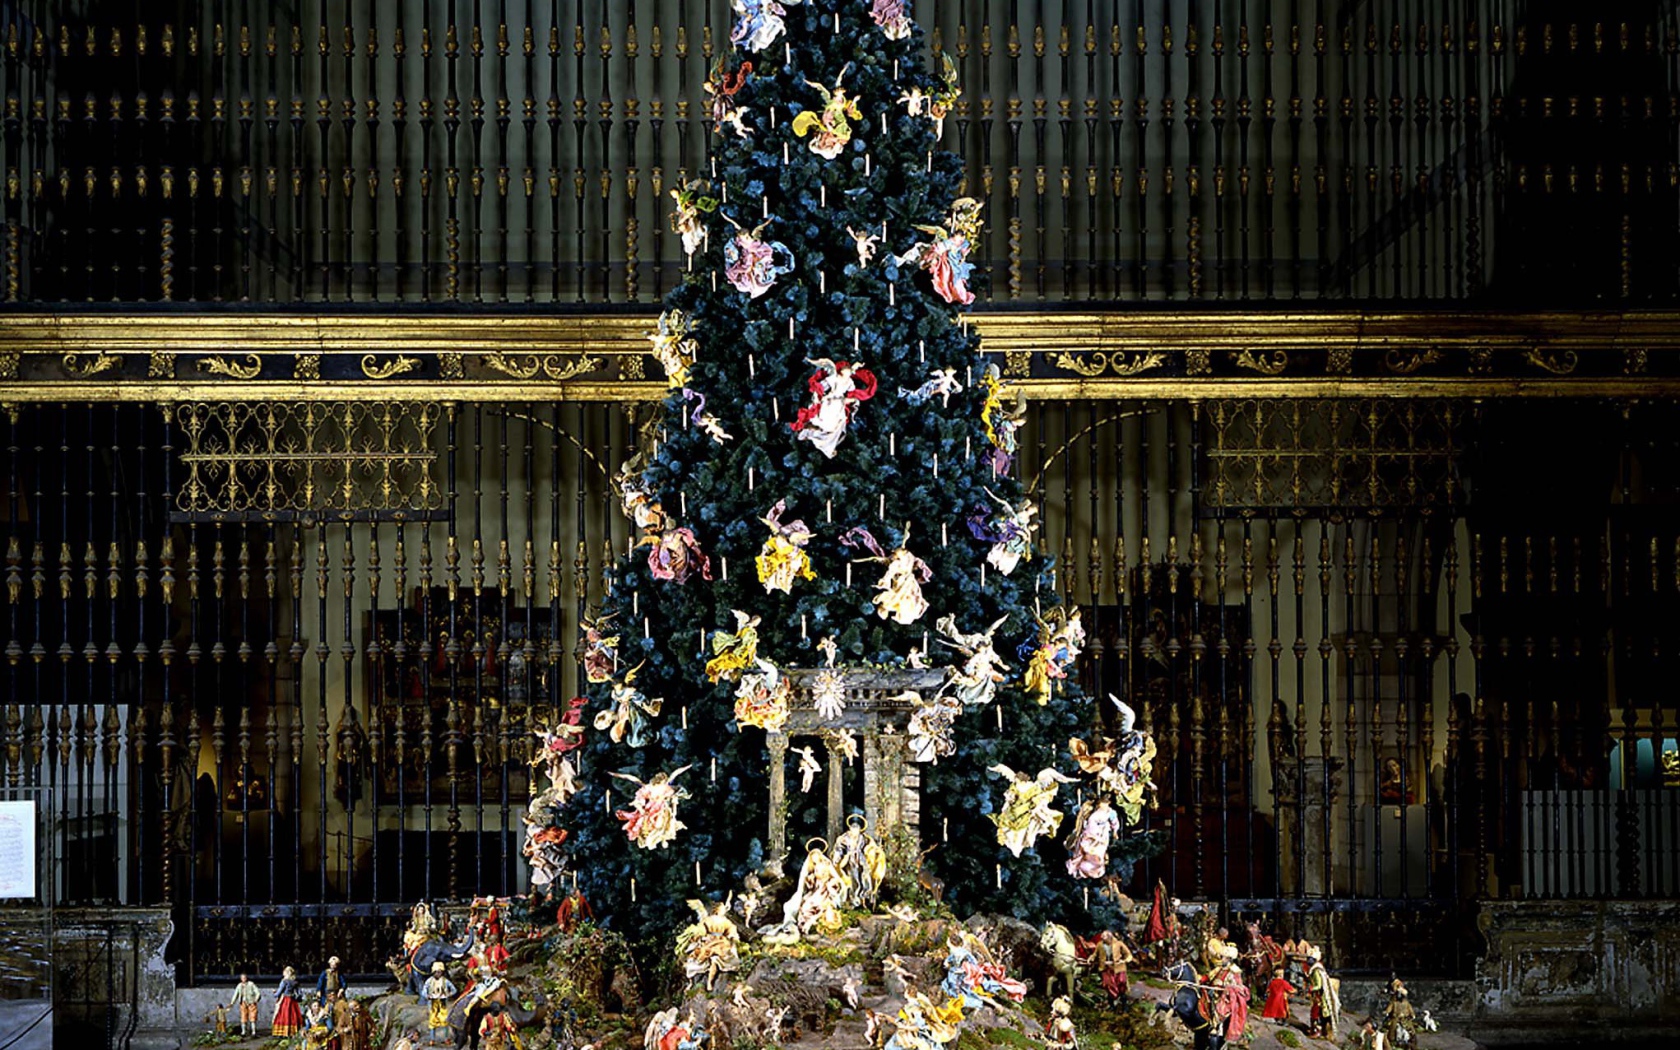 Новогодняя елка в музее пушкина